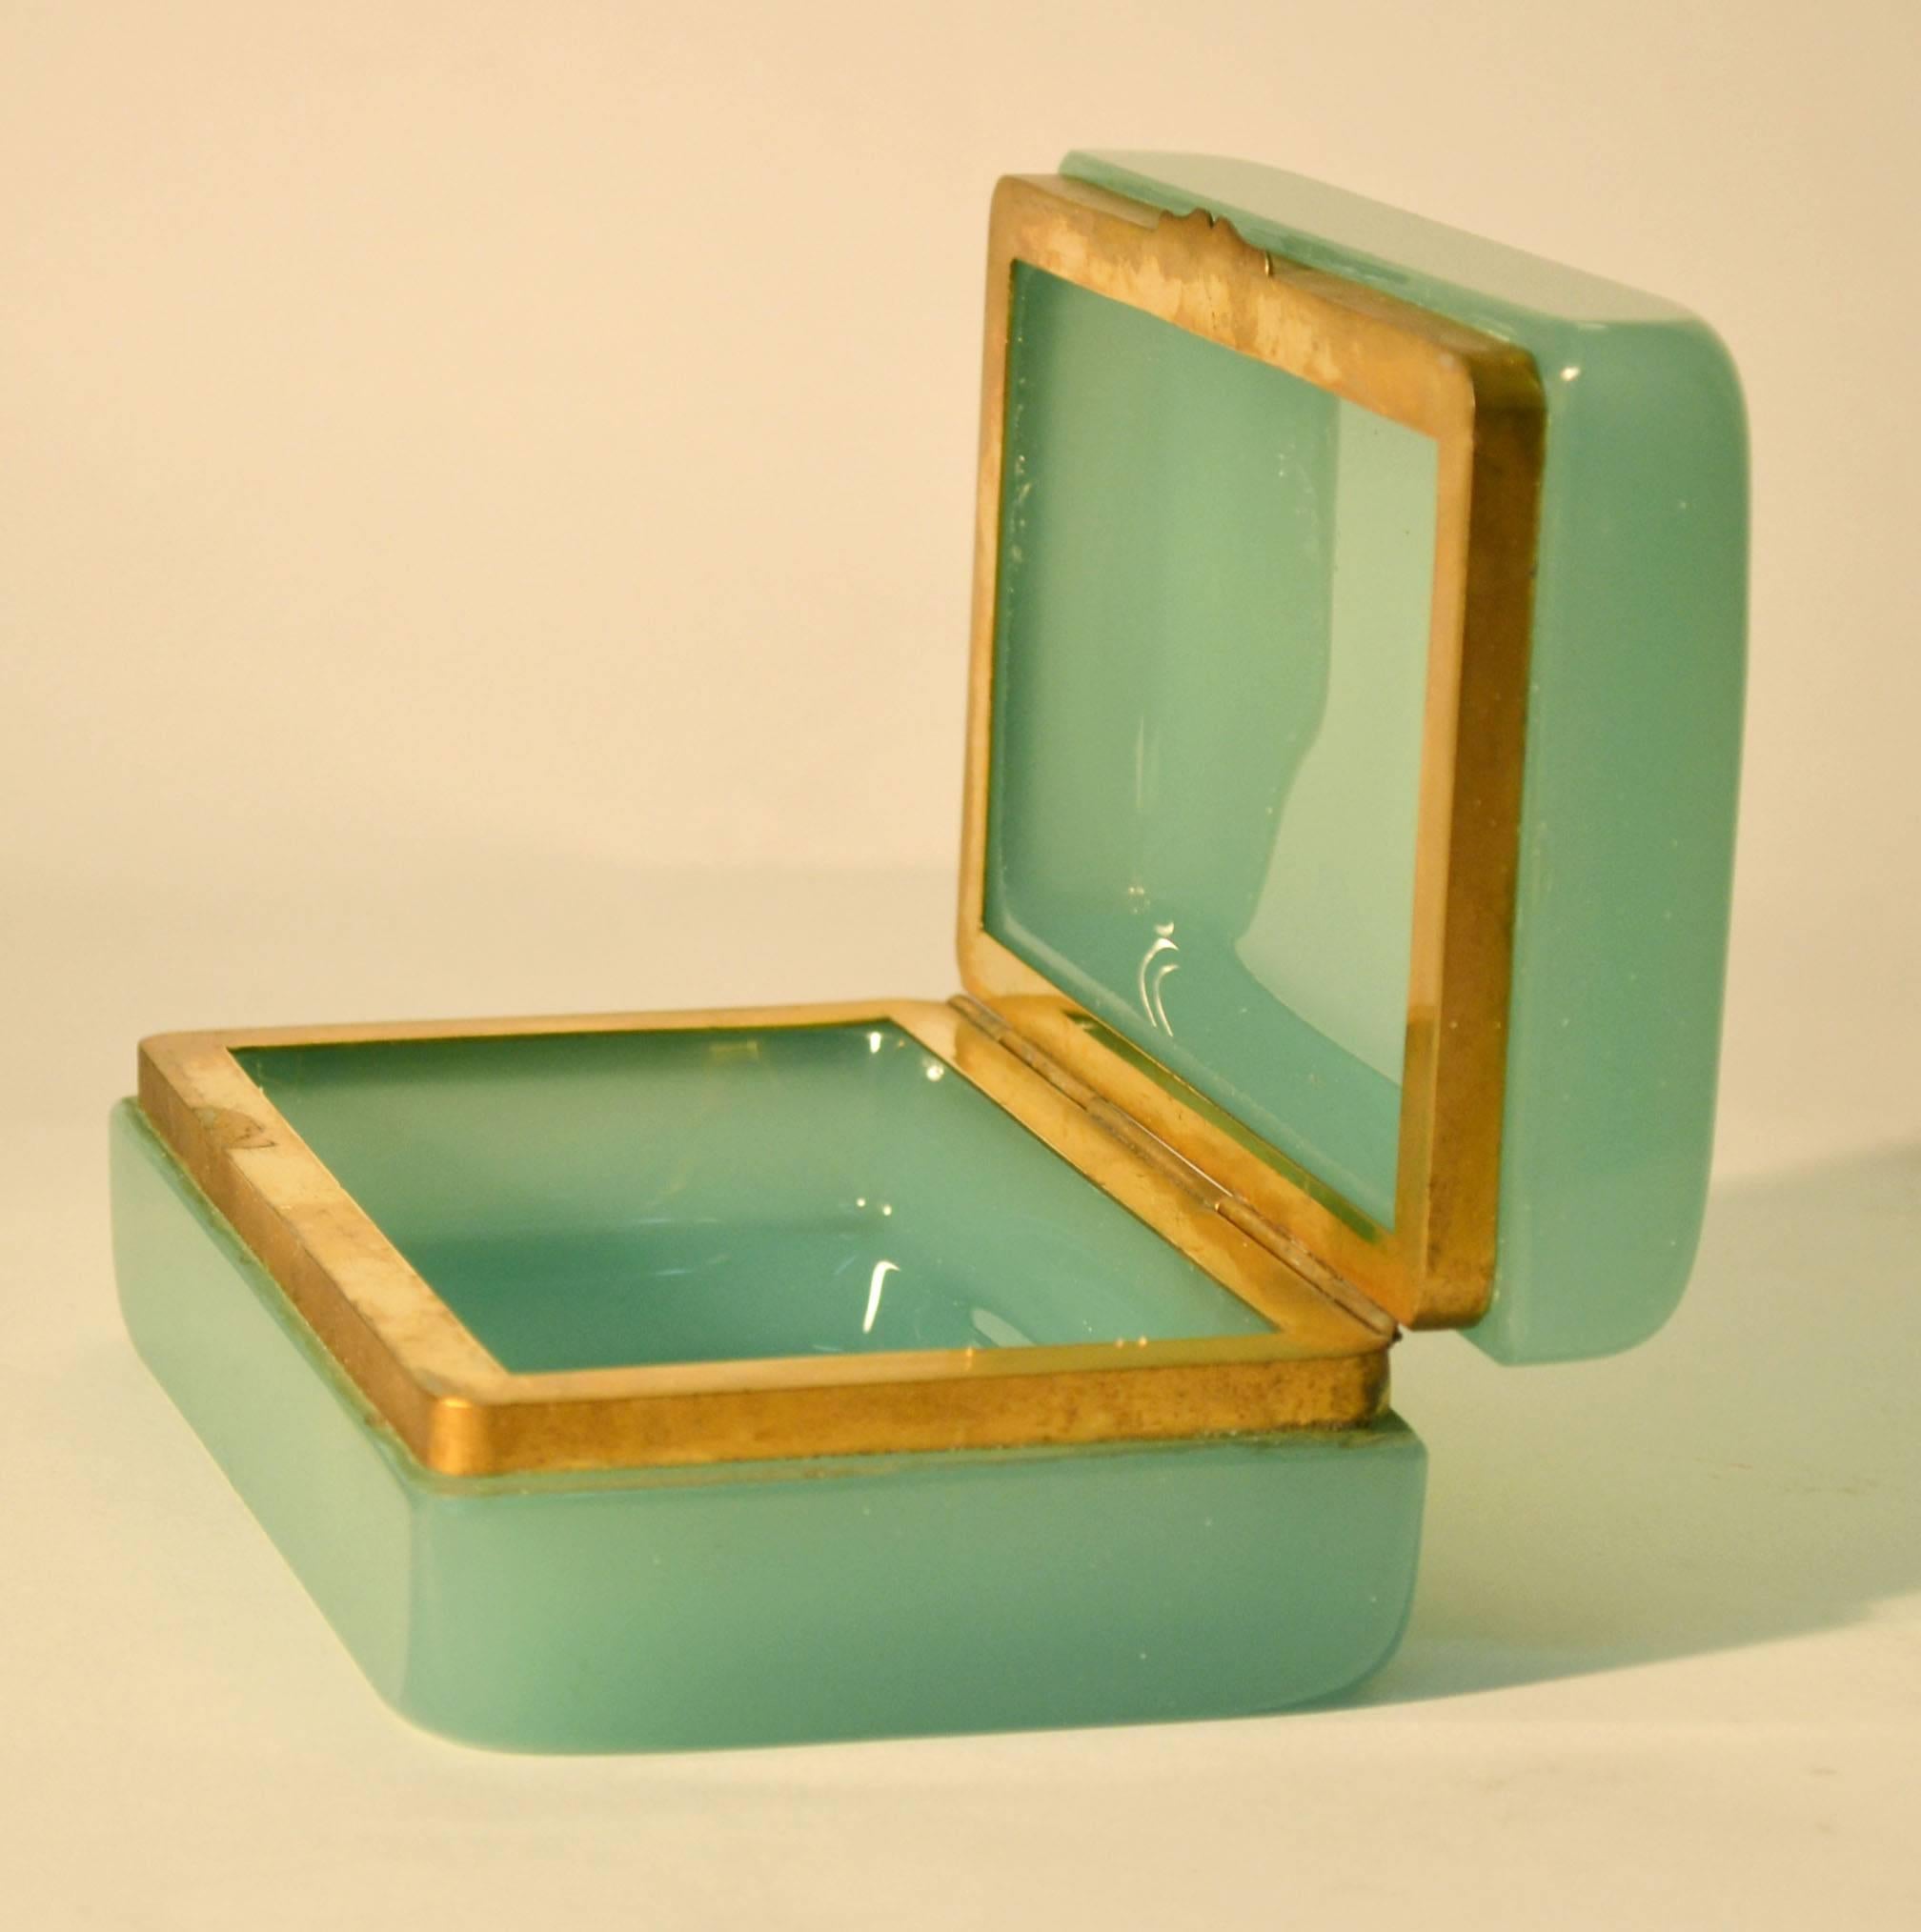 Pale jade opaline glass and brass hinged trinket box by Fratelli Ferro, Murano.